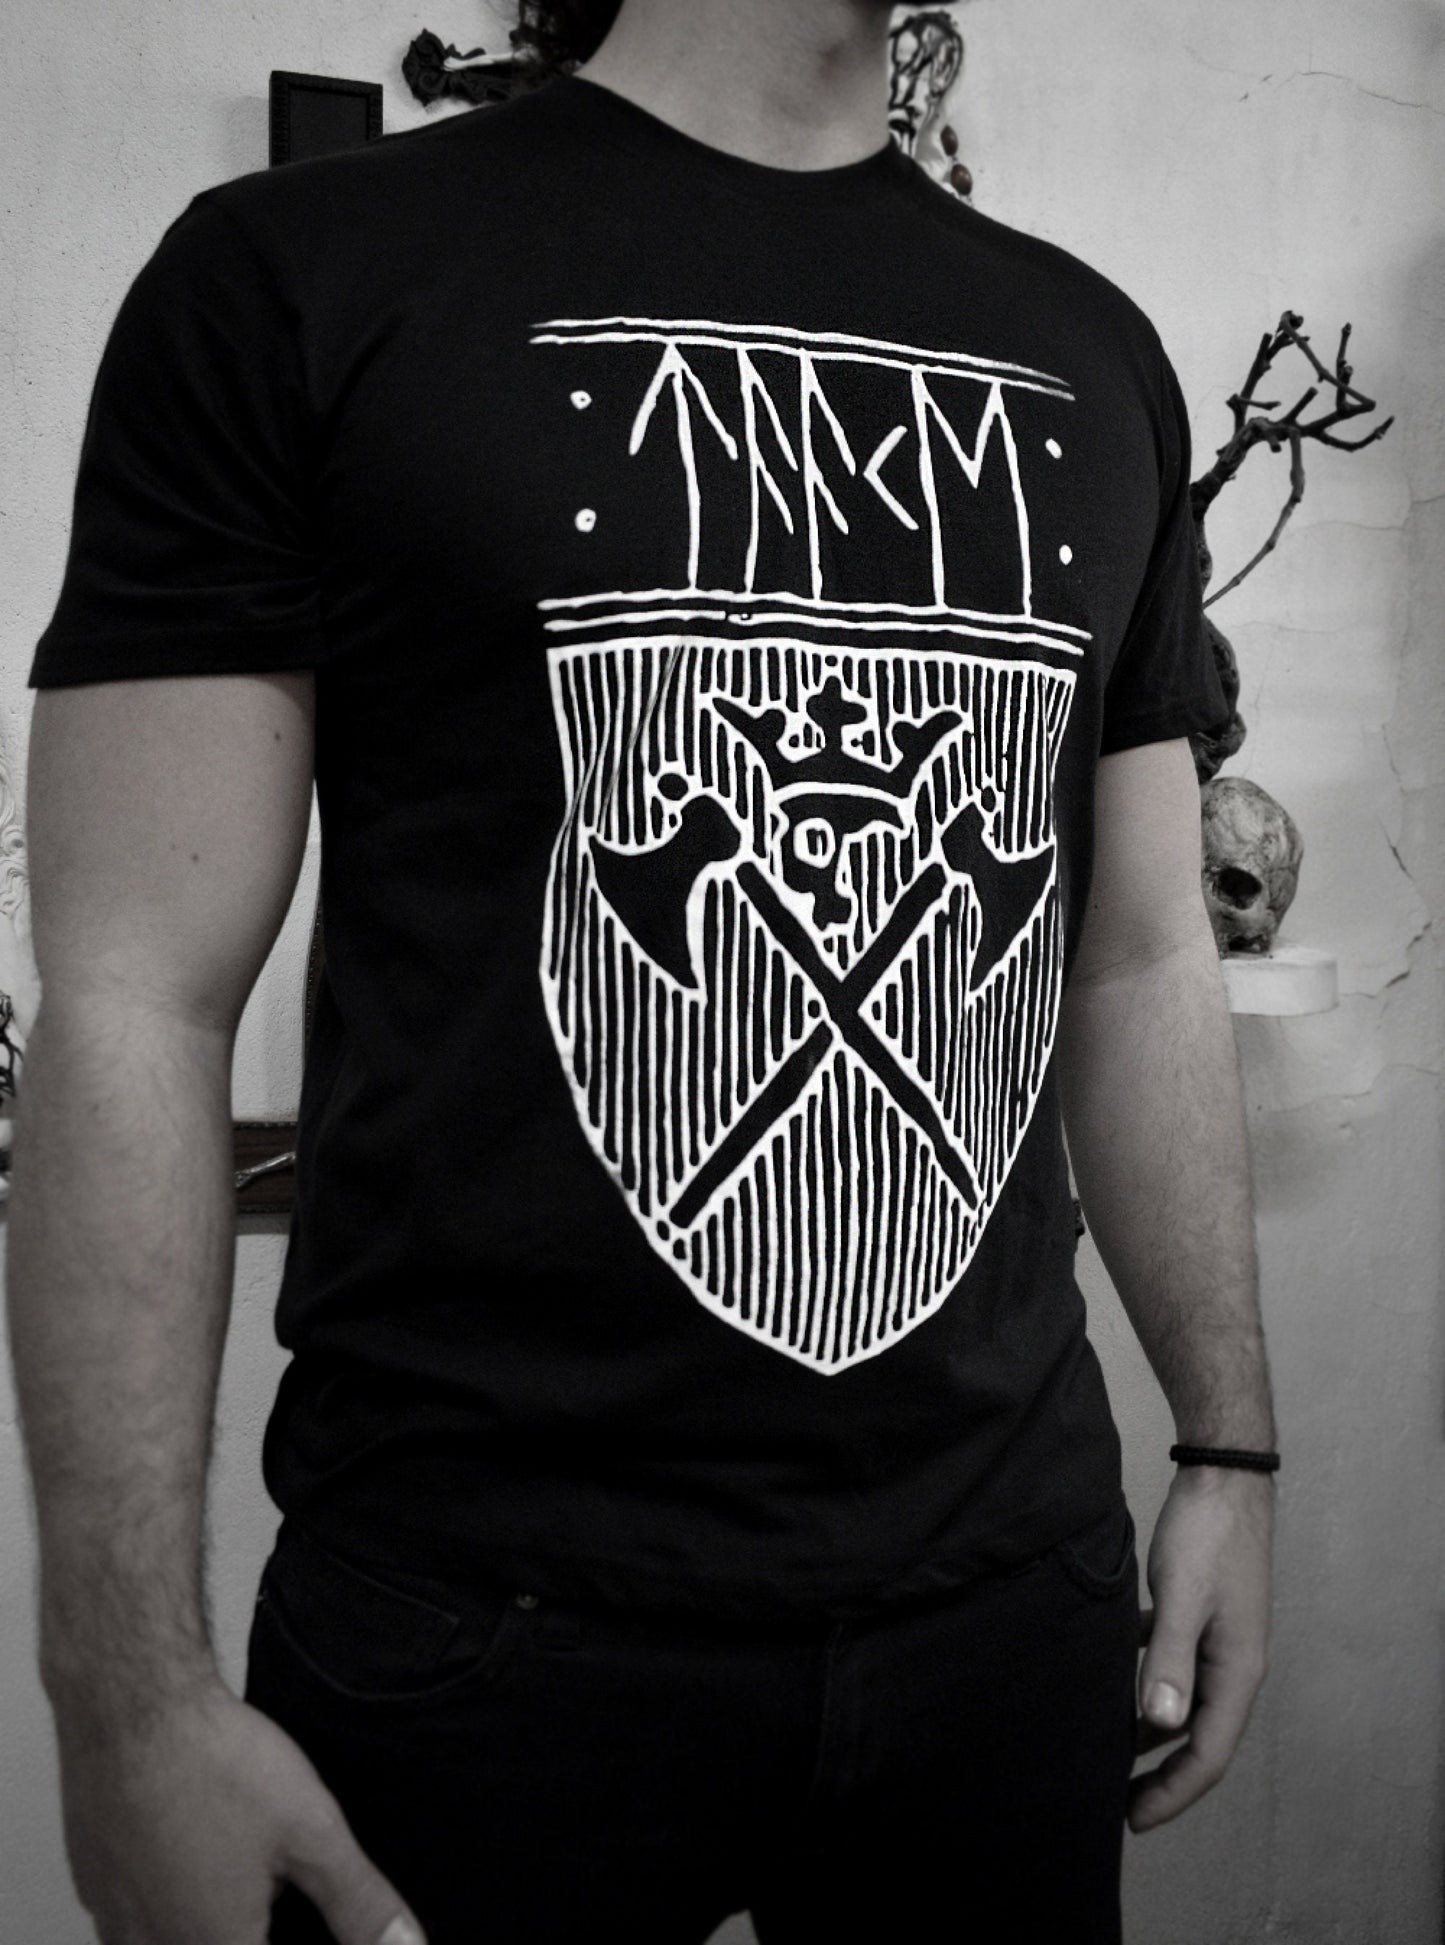 Taake - Helnorsk Svartmetall shirt ⇹ black metal tee ⇹ Taake black metal tshirt